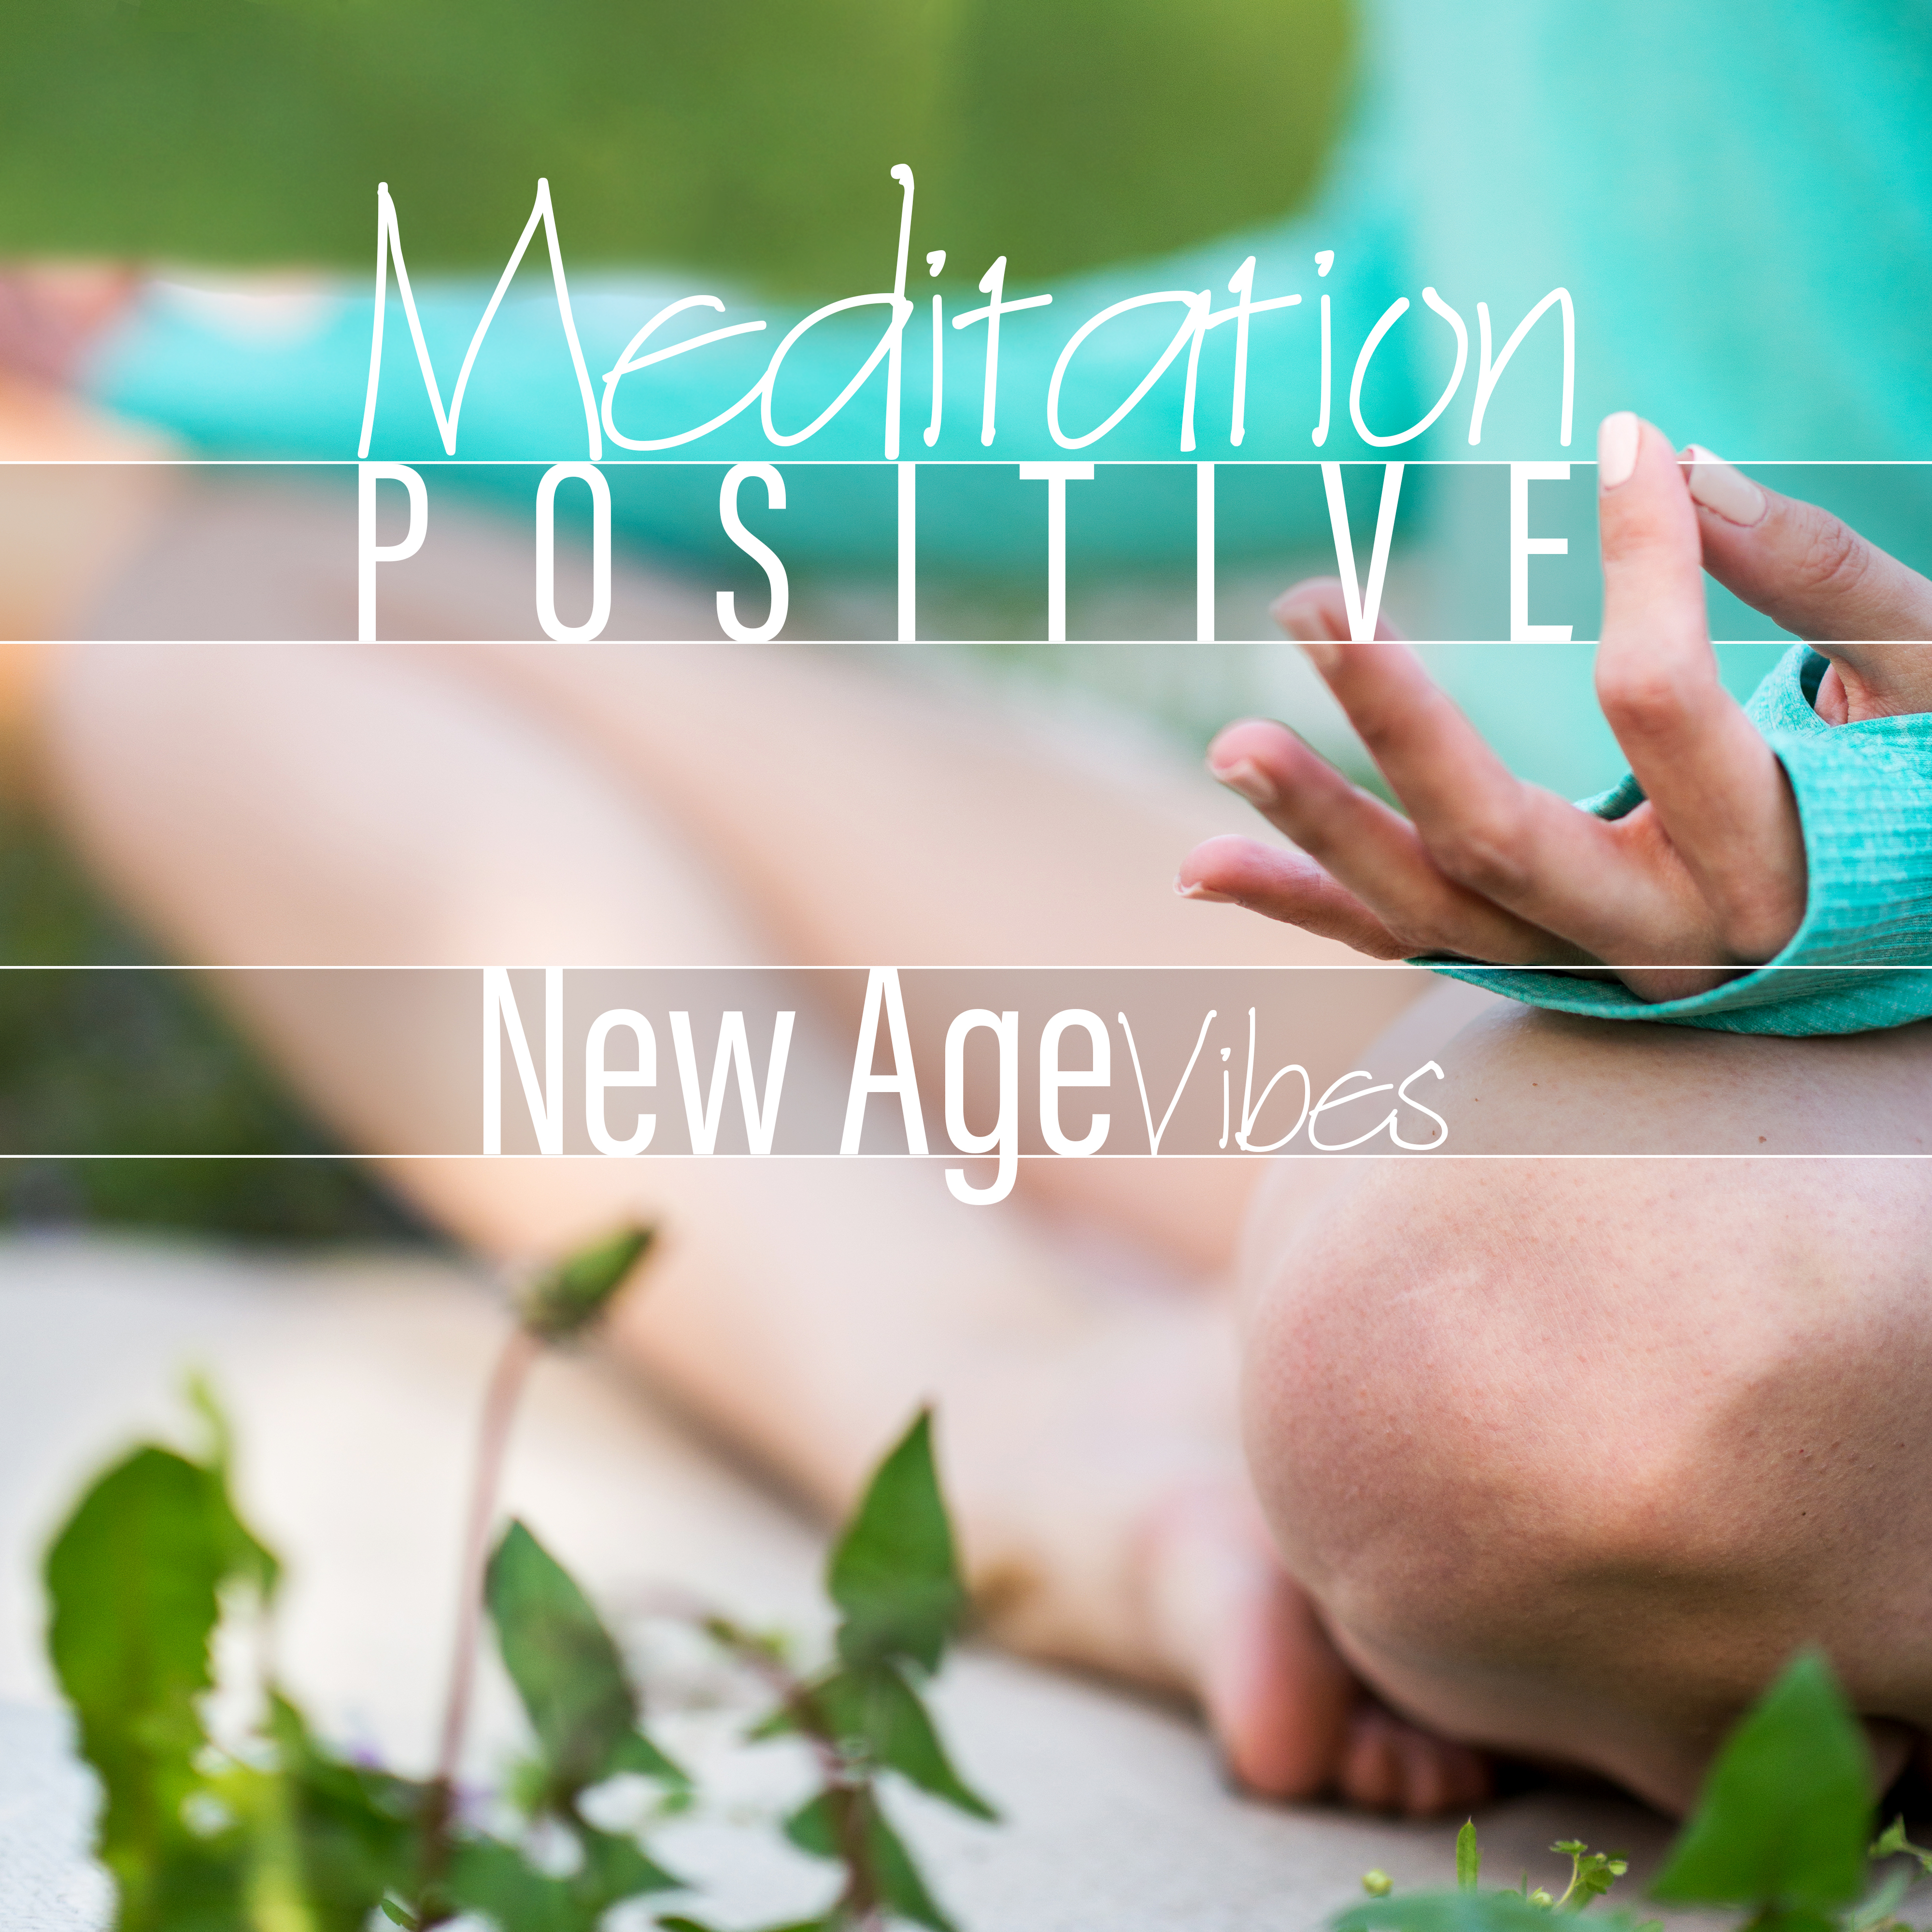 Meditation Positive New Age Vibes  Yoga  Relax Zen Music, Mind  Body Control Training